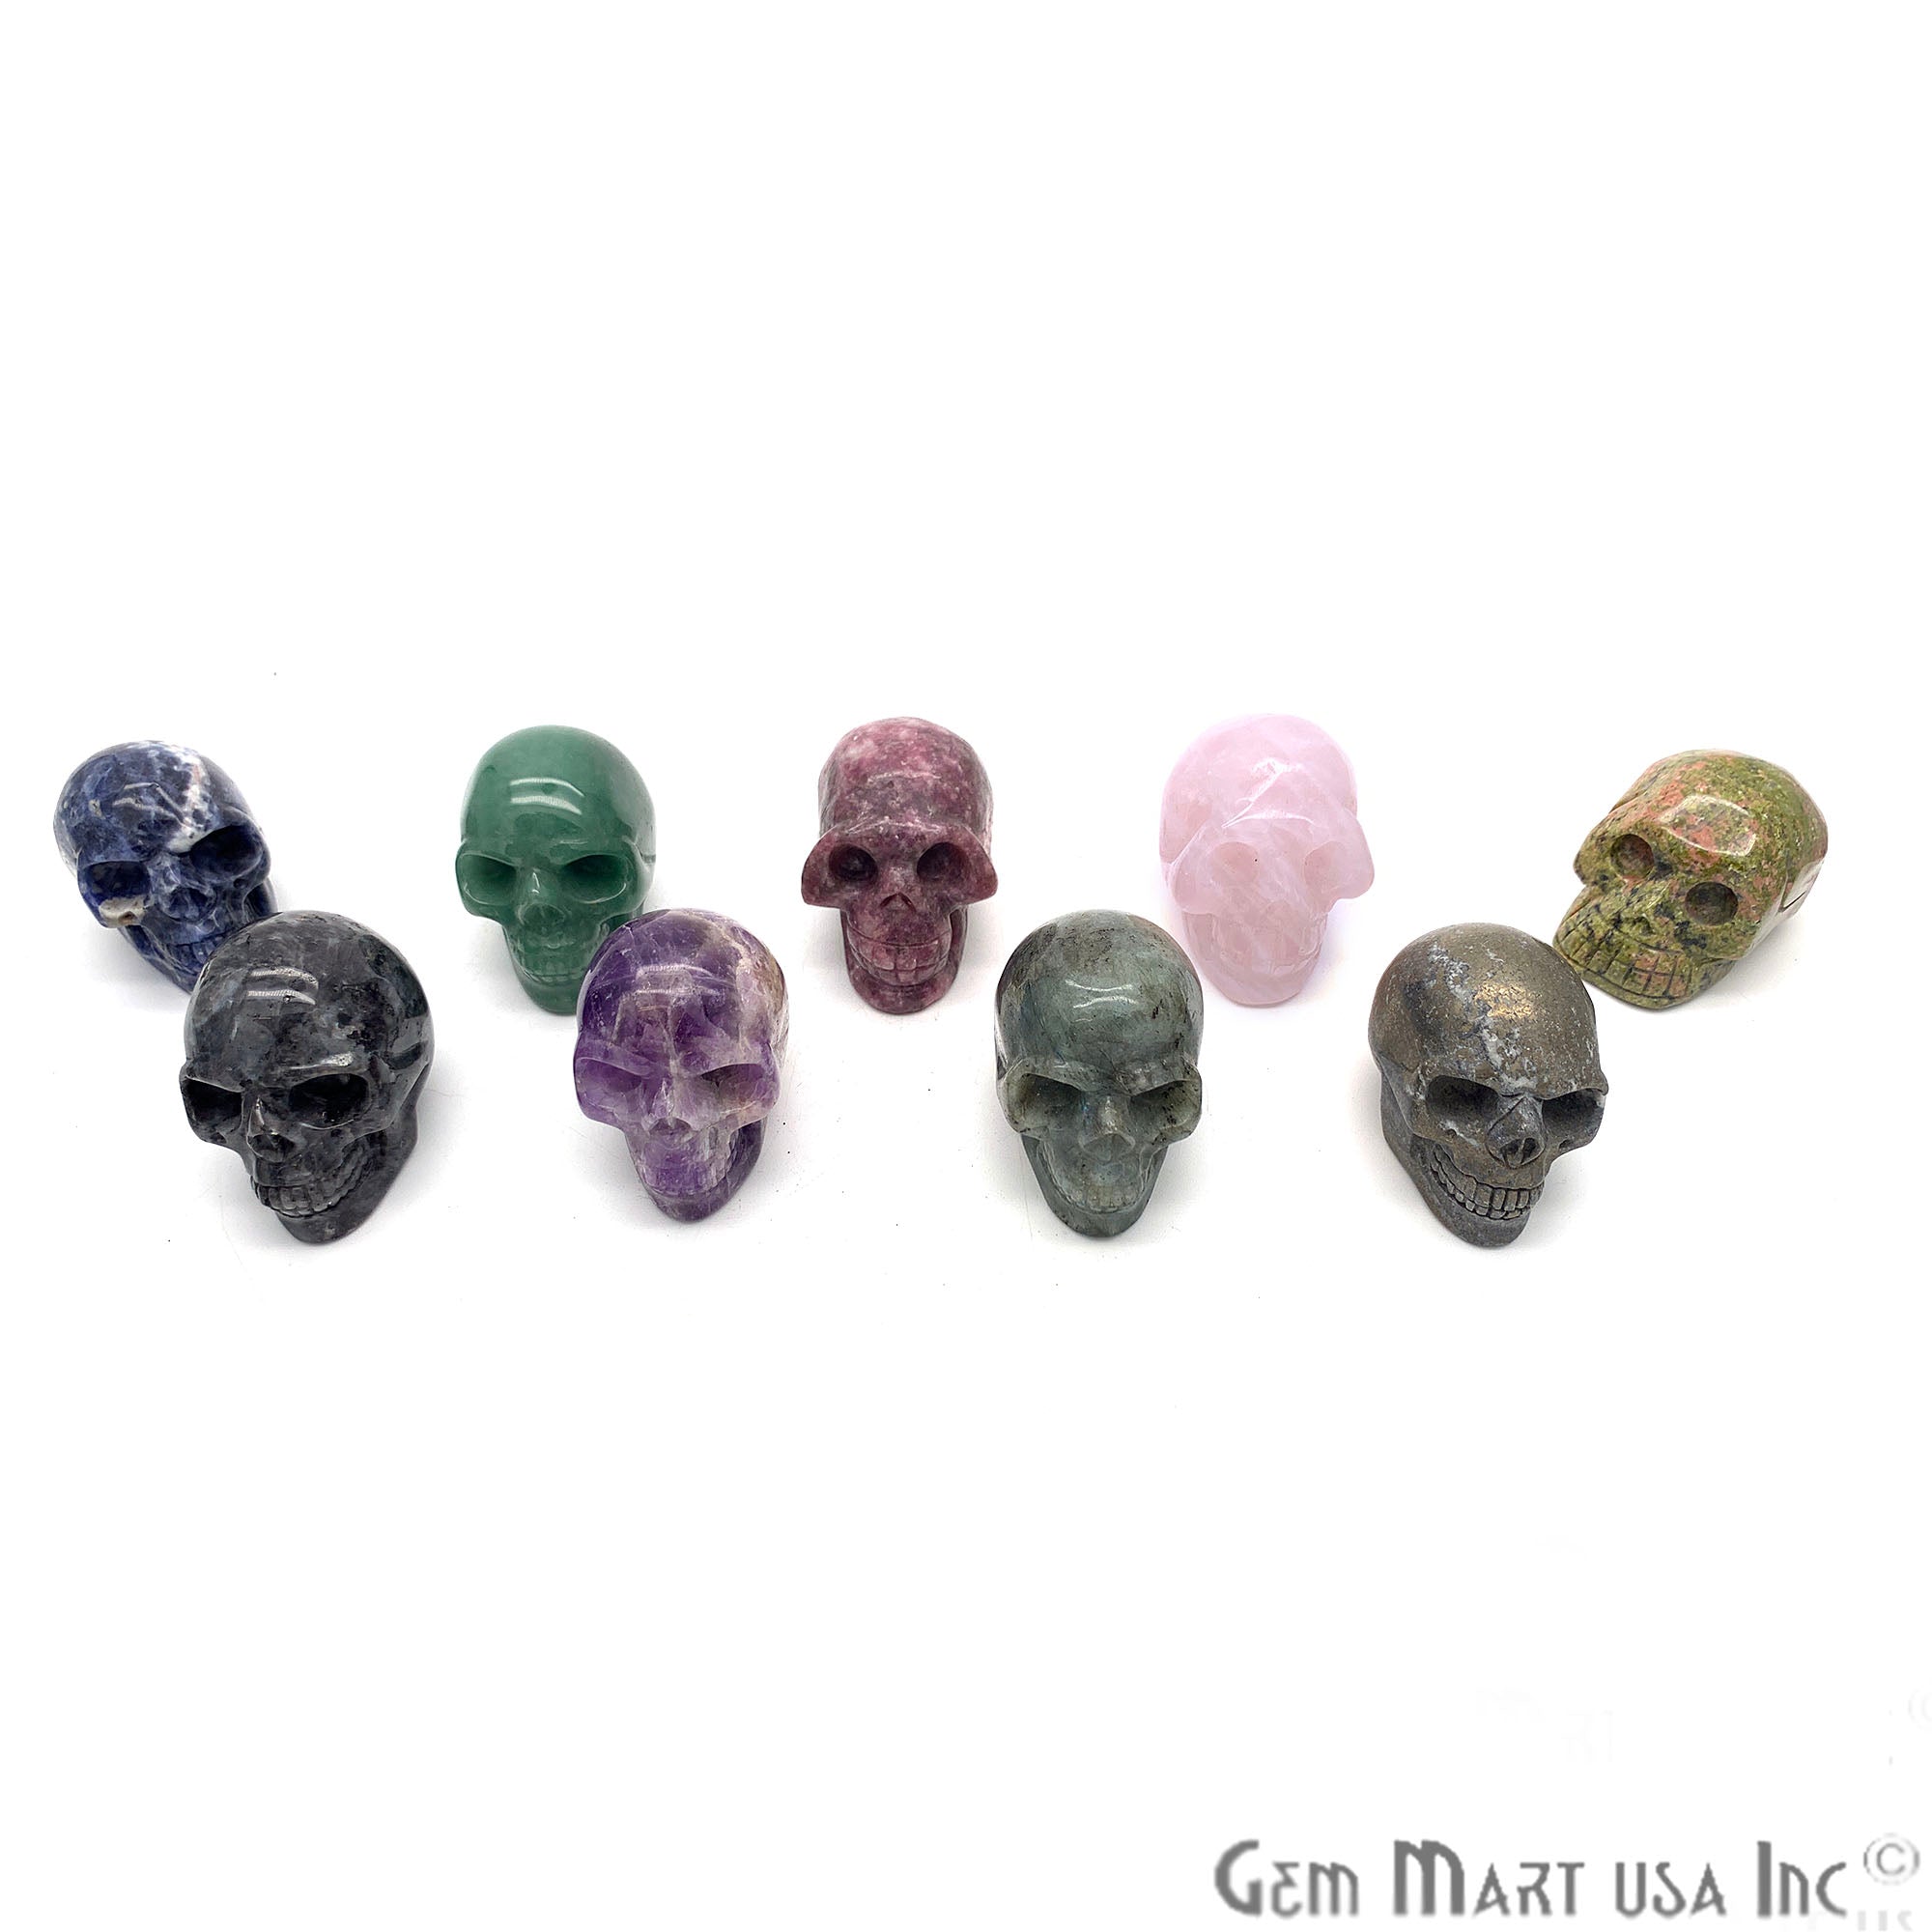 Gemstone Skull 2 Inch, Handcrafted skull,Home Decor (Pick Your Gemstone) - GemMartUSA